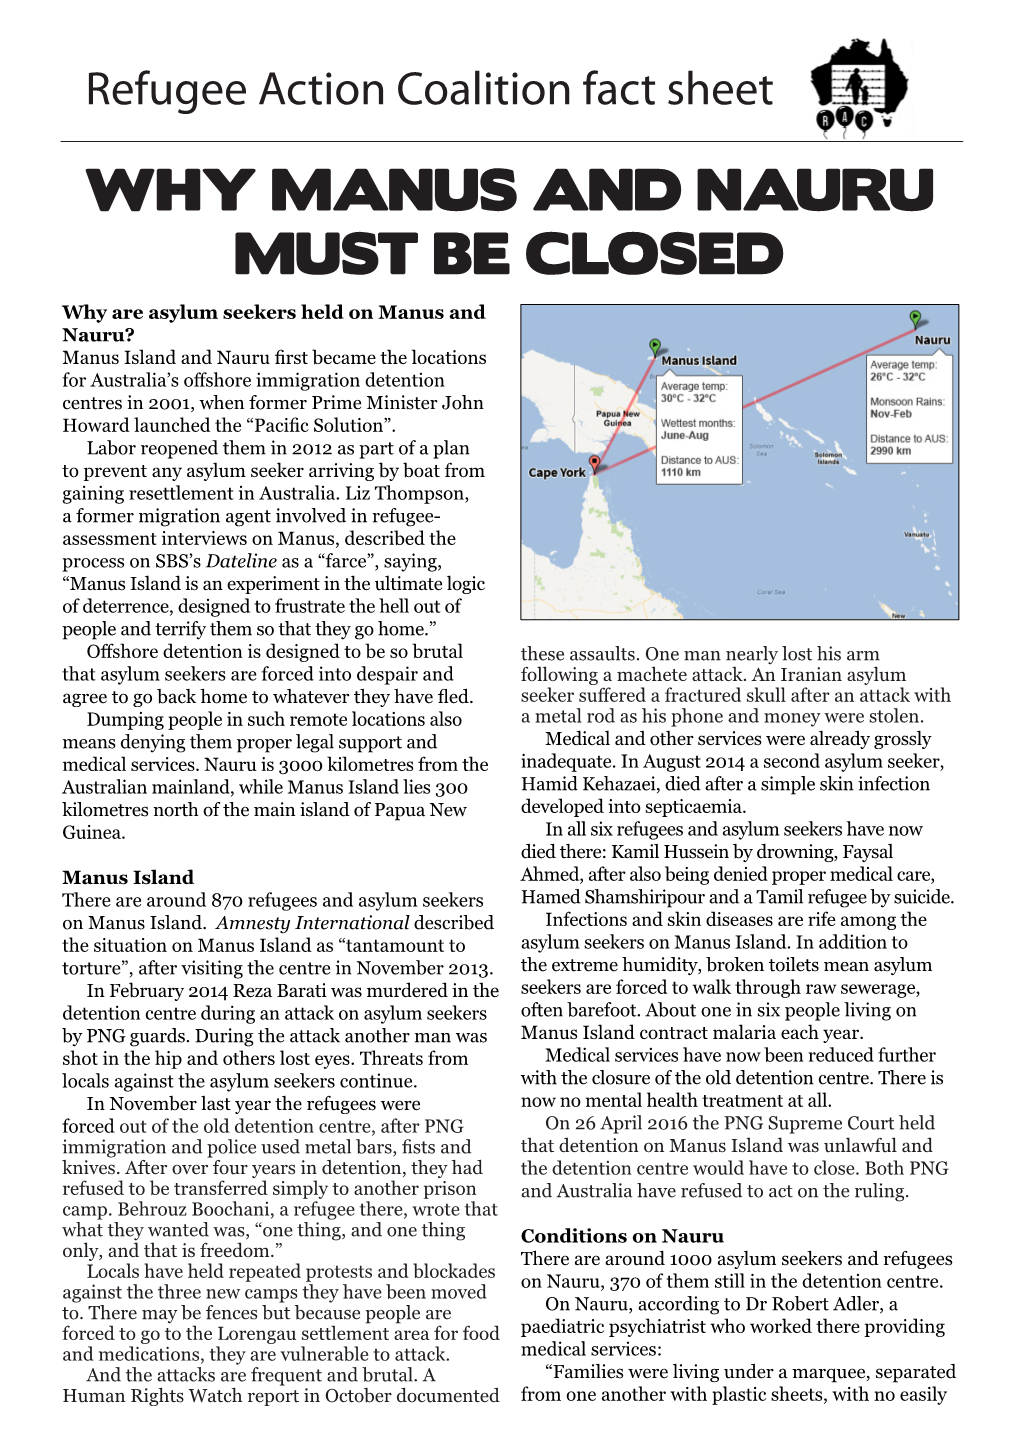 Why Manus and Nauru Must Be Closed